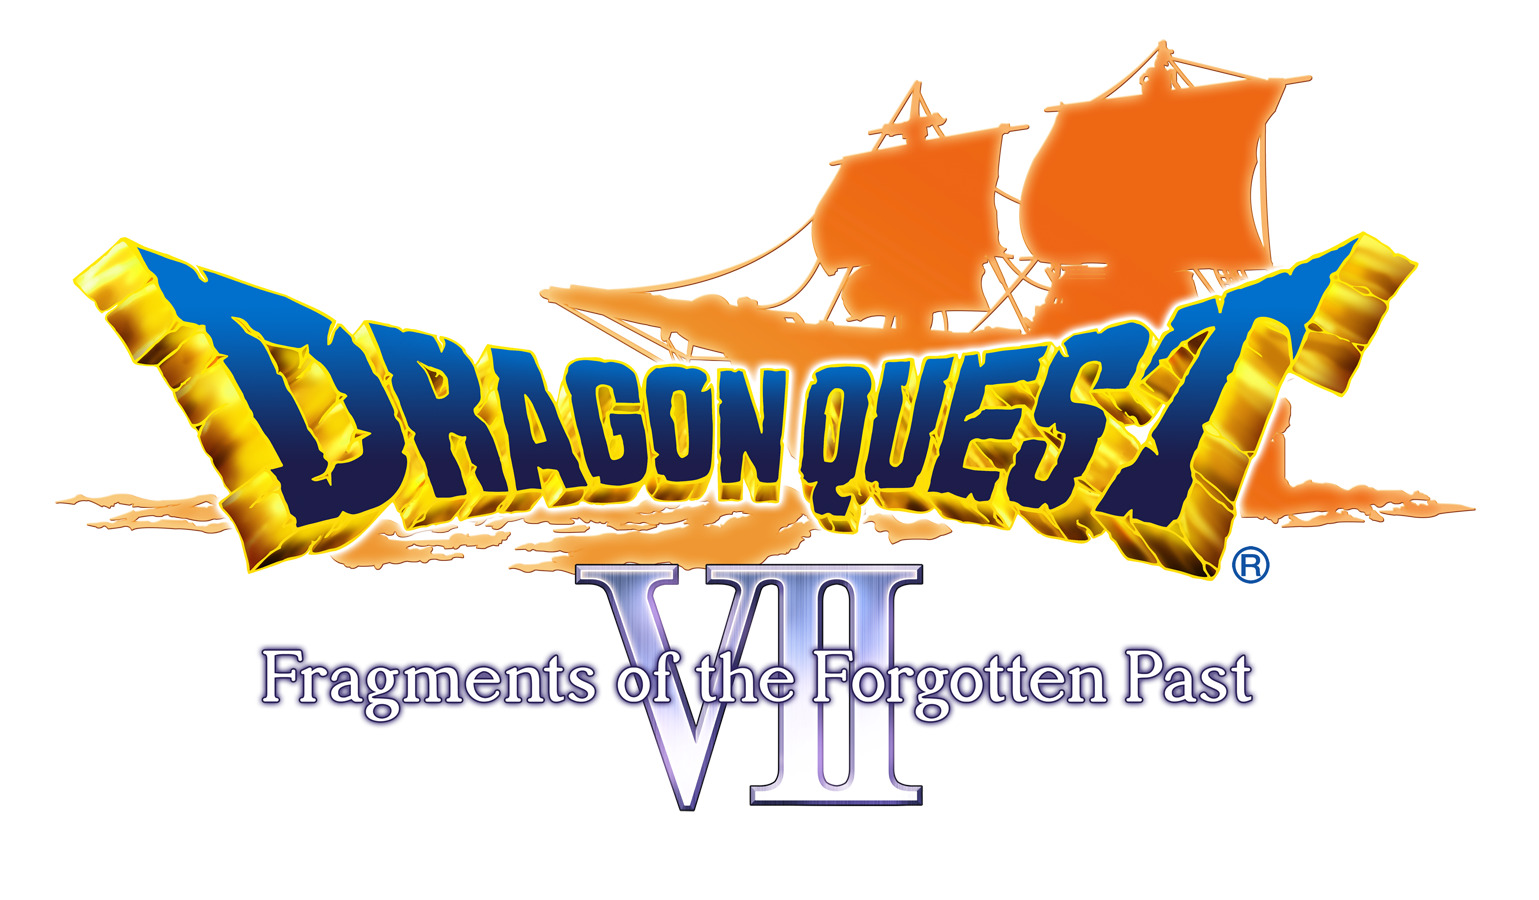 dragon quest 7 3ds download